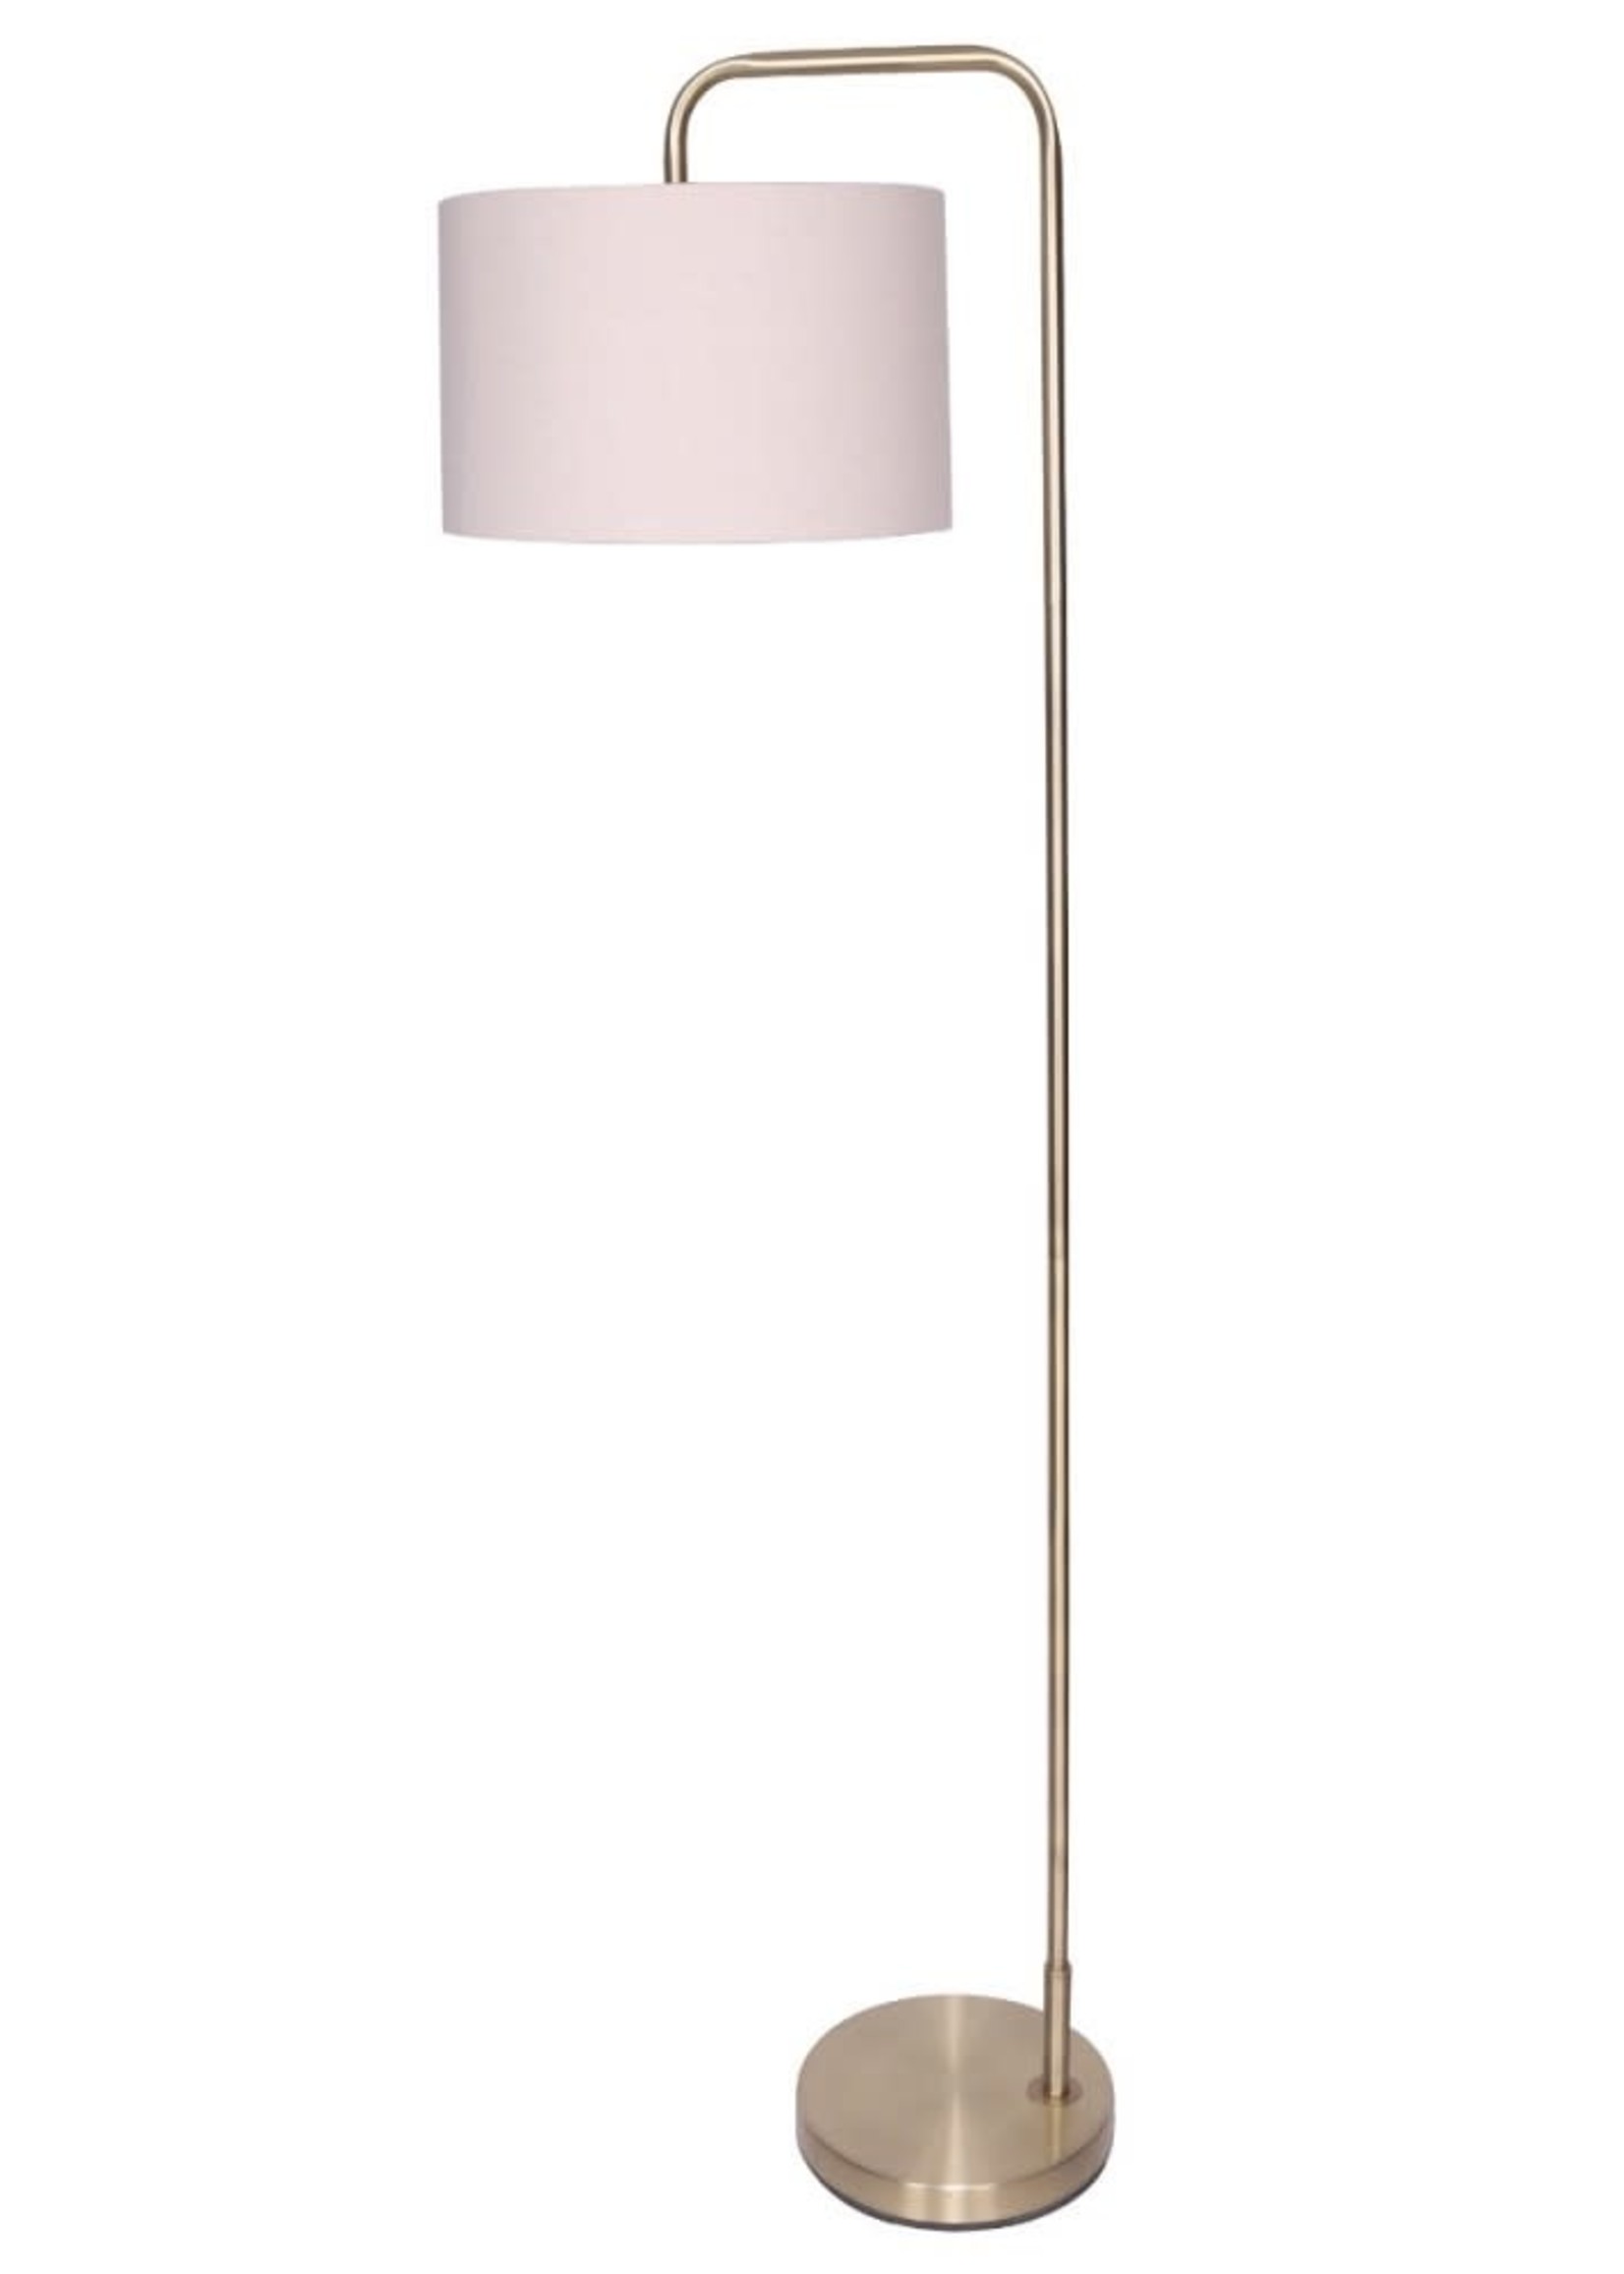 FLOOR LAMP ANTIQUE BRASS WHITE SHADE